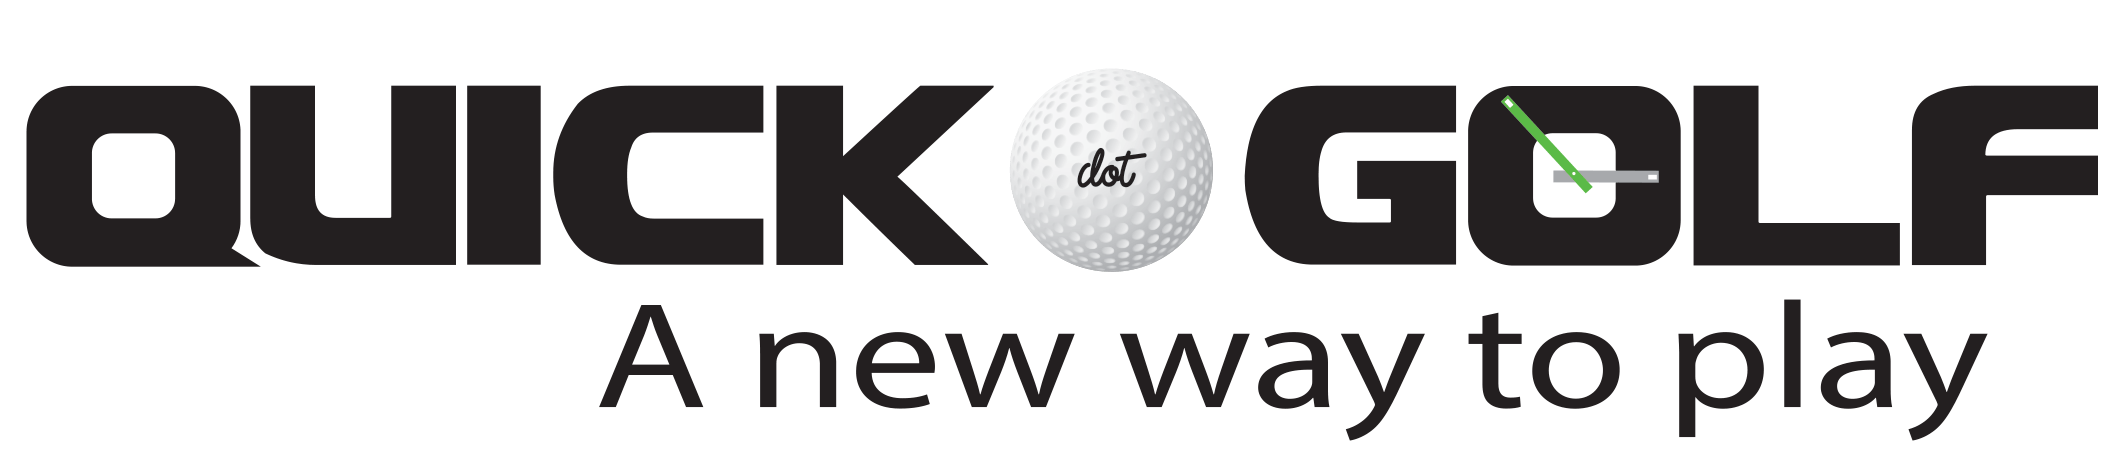 logo clipart golf